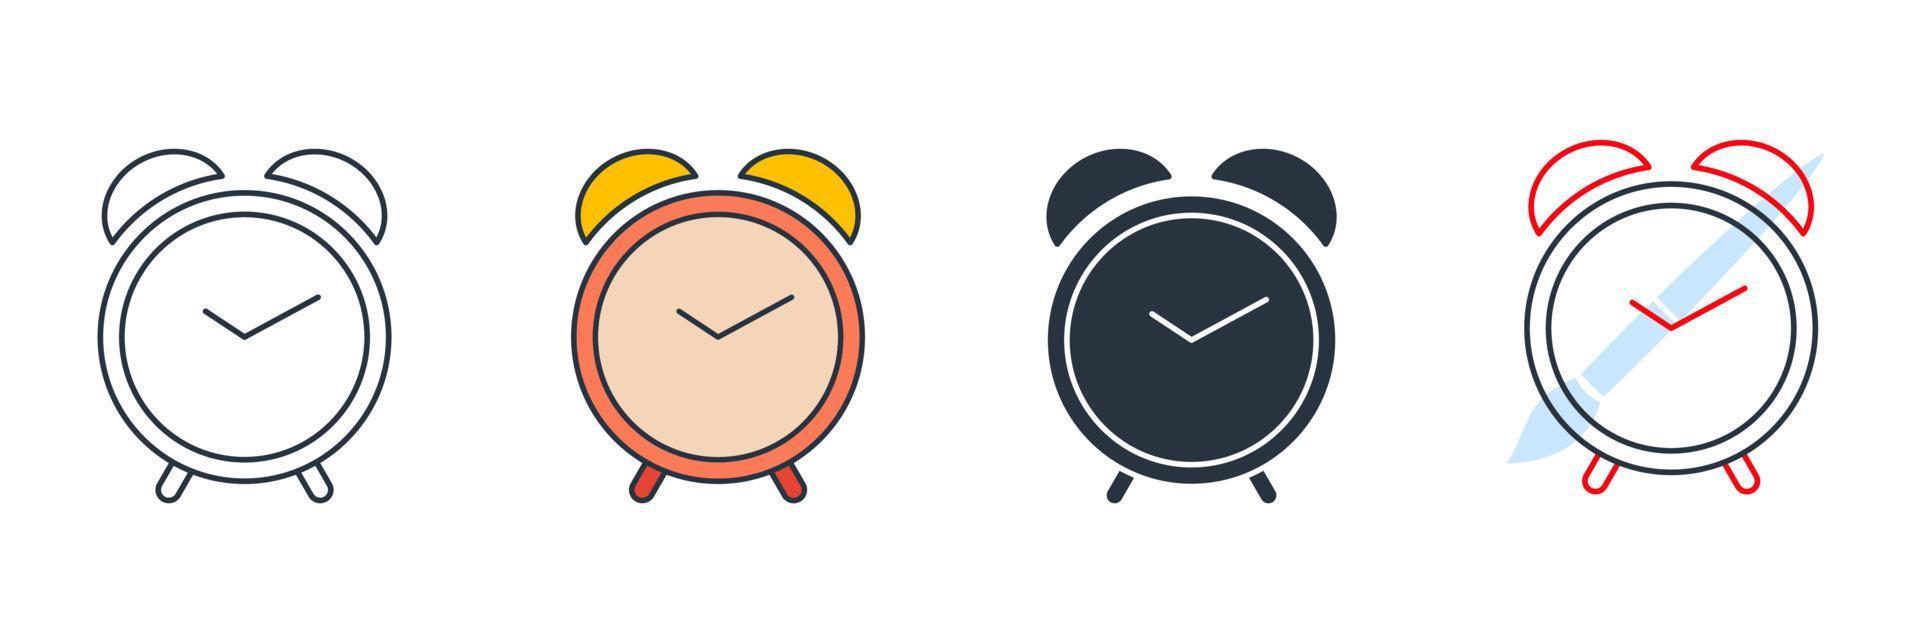 alarm clock icon logo vector illustration. alarm clock ringing symbol template for graphic and web design collection